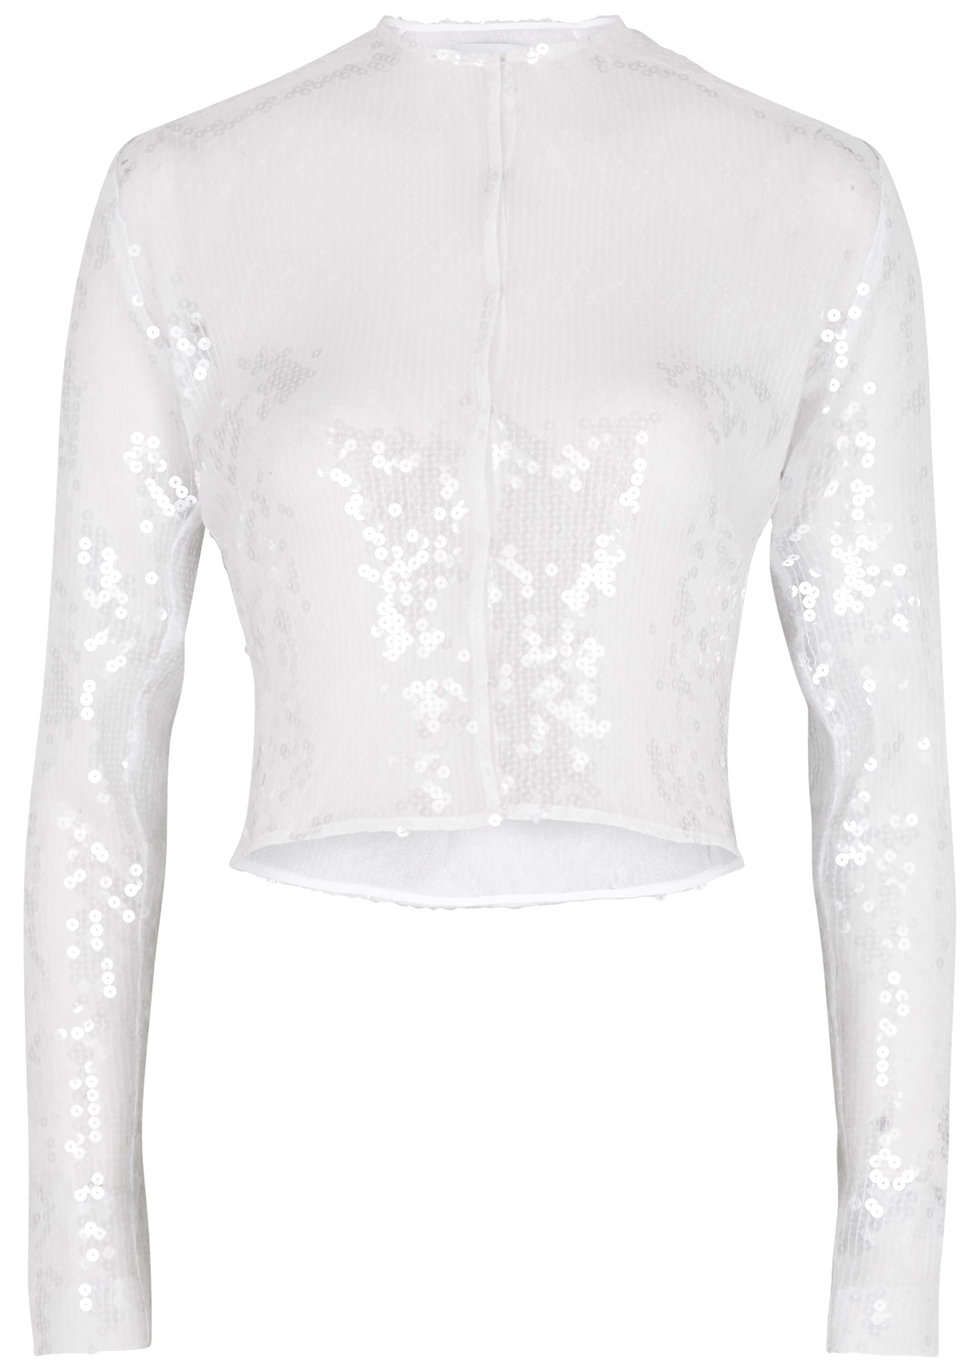 16 Arlington Keid white sequin cardigan - Harvey Nichols